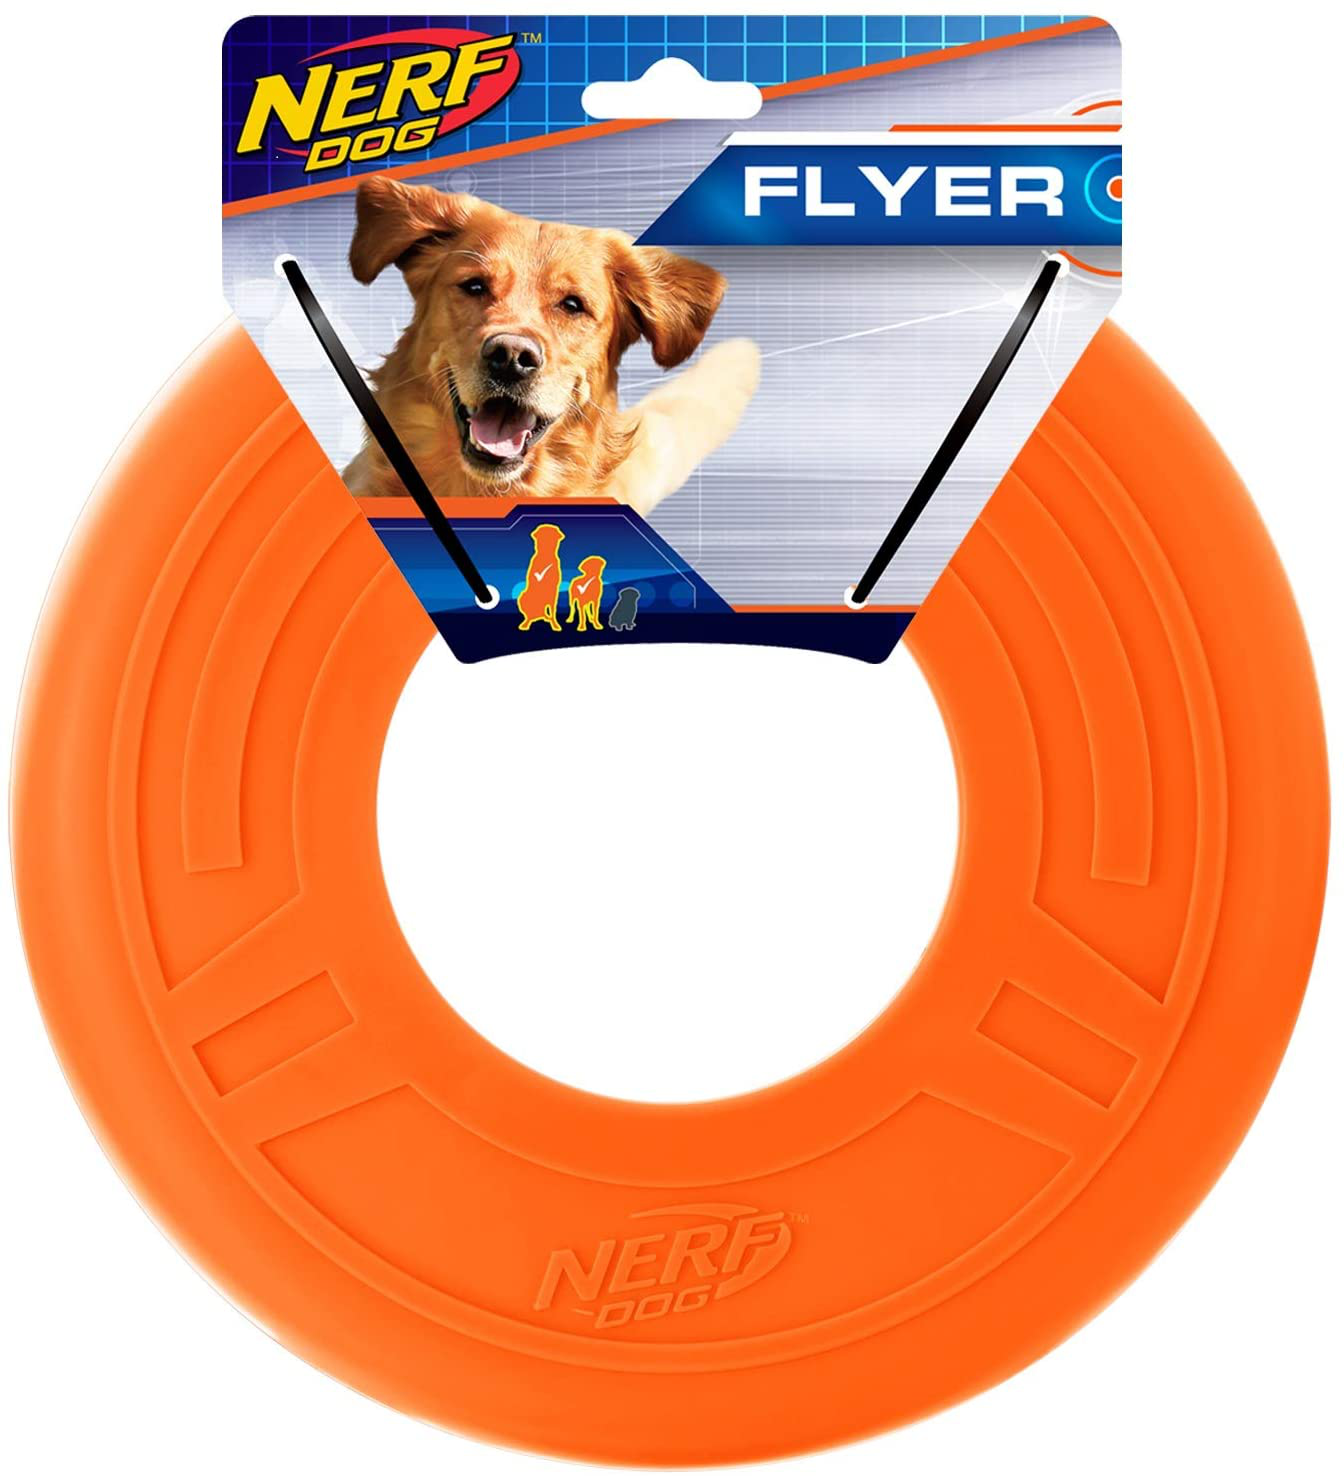 Nerf Dog 10In Atomic Flyer - Orange Animals & Pet Supplies > Pet Supplies > Dog Supplies > Dog Toys Gramercy Products, LLC   